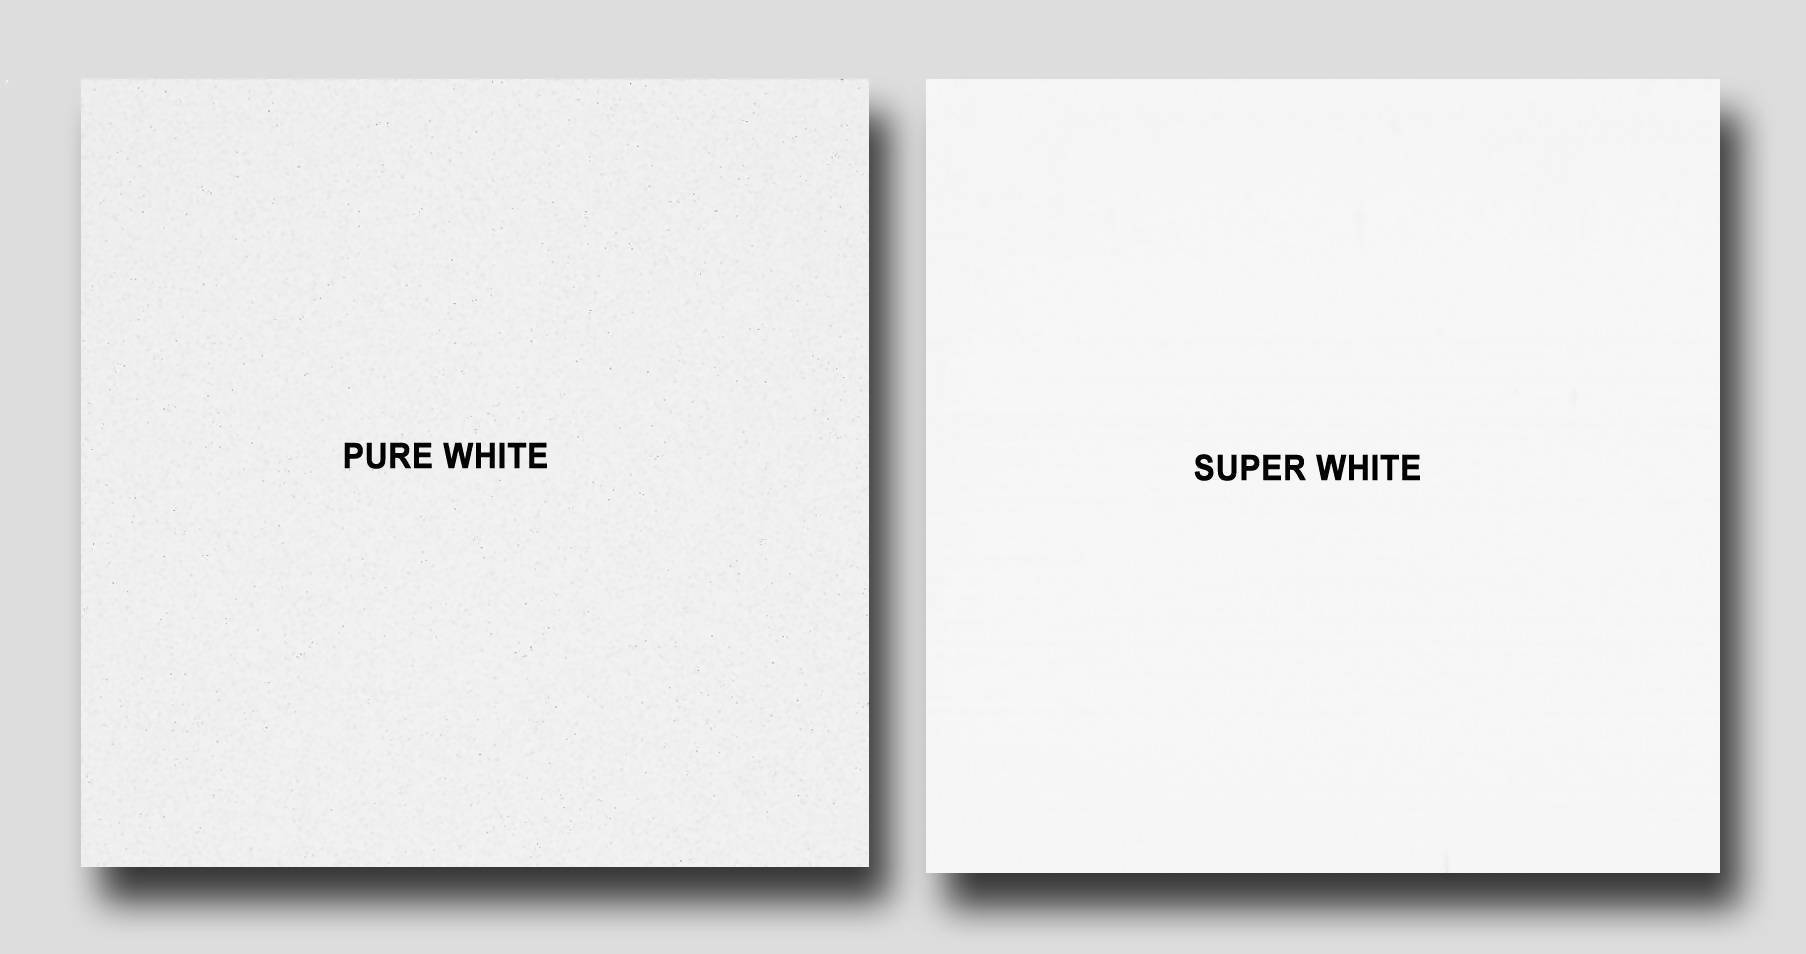 SUPER WHITE QUARTZ,Quartz,Work-Tops,www.work-tops.com